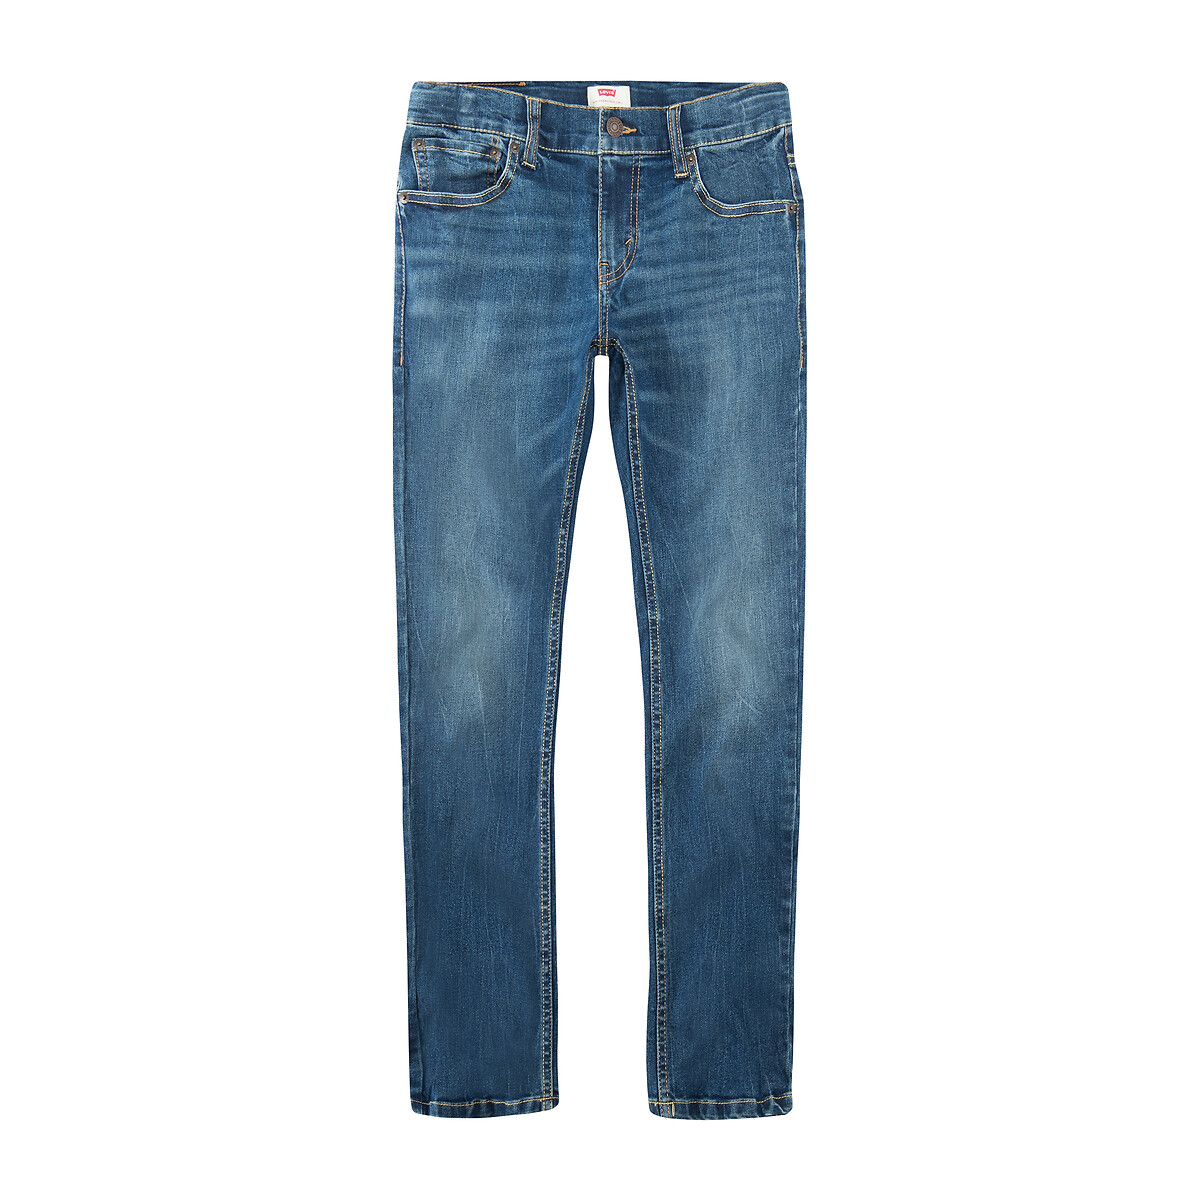 NEW Boys Original LEVI'S 511 Denim Jeans Slim Fit Kids Indigo Size Age 4-16 